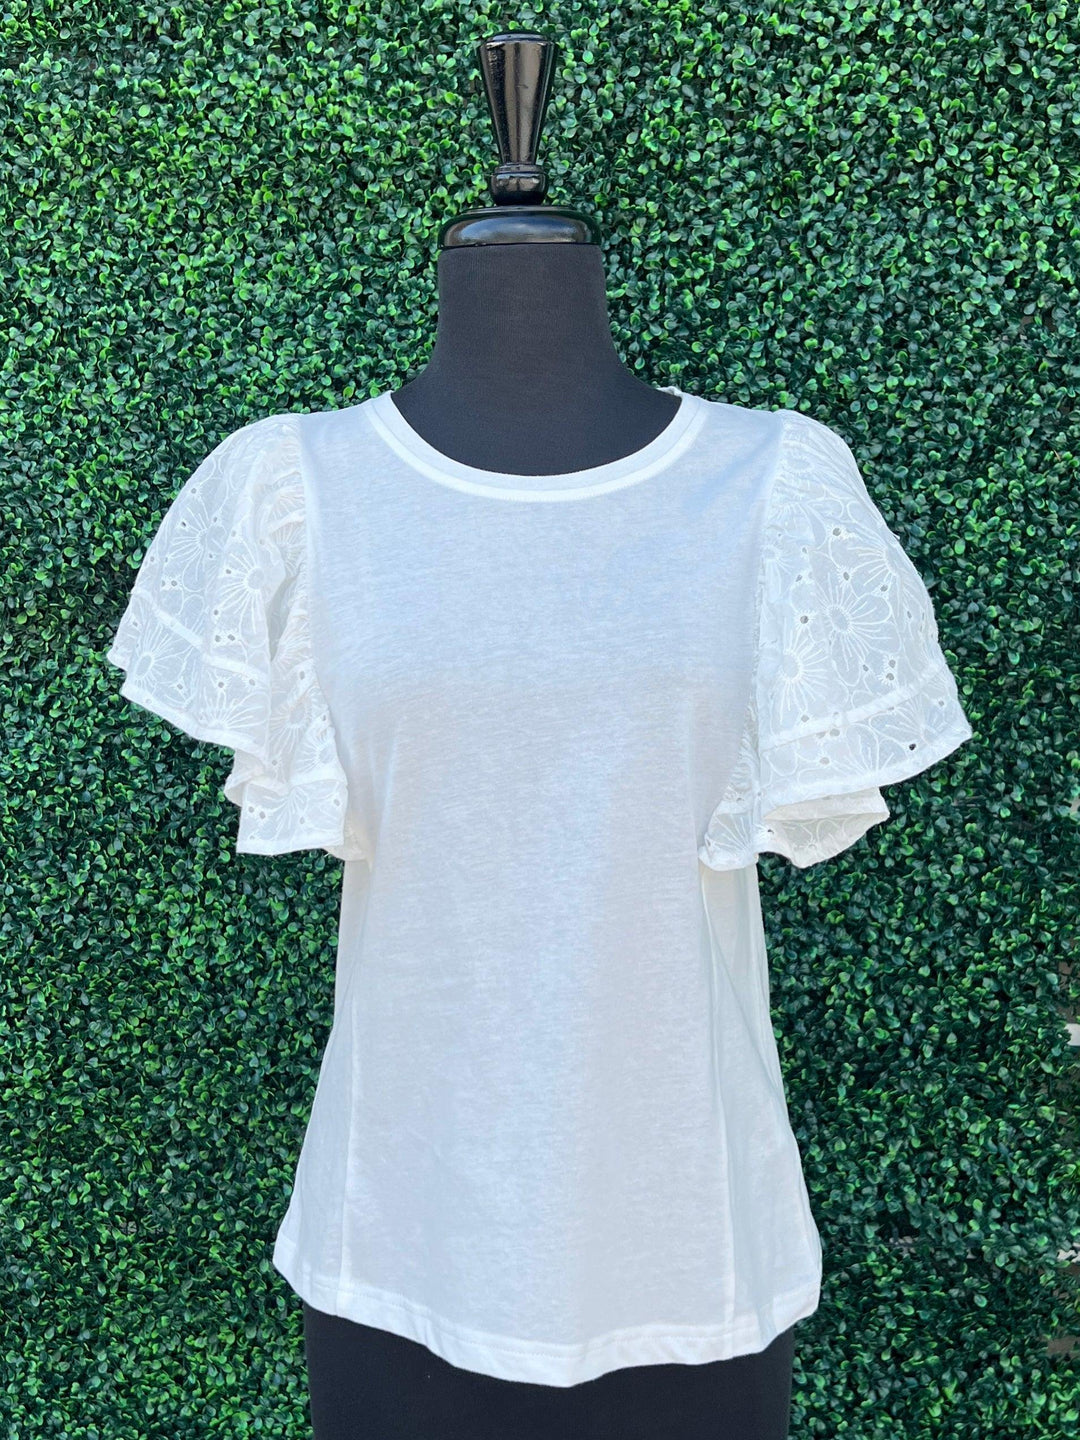 feminine cut white tee shirt online tres chic cotton